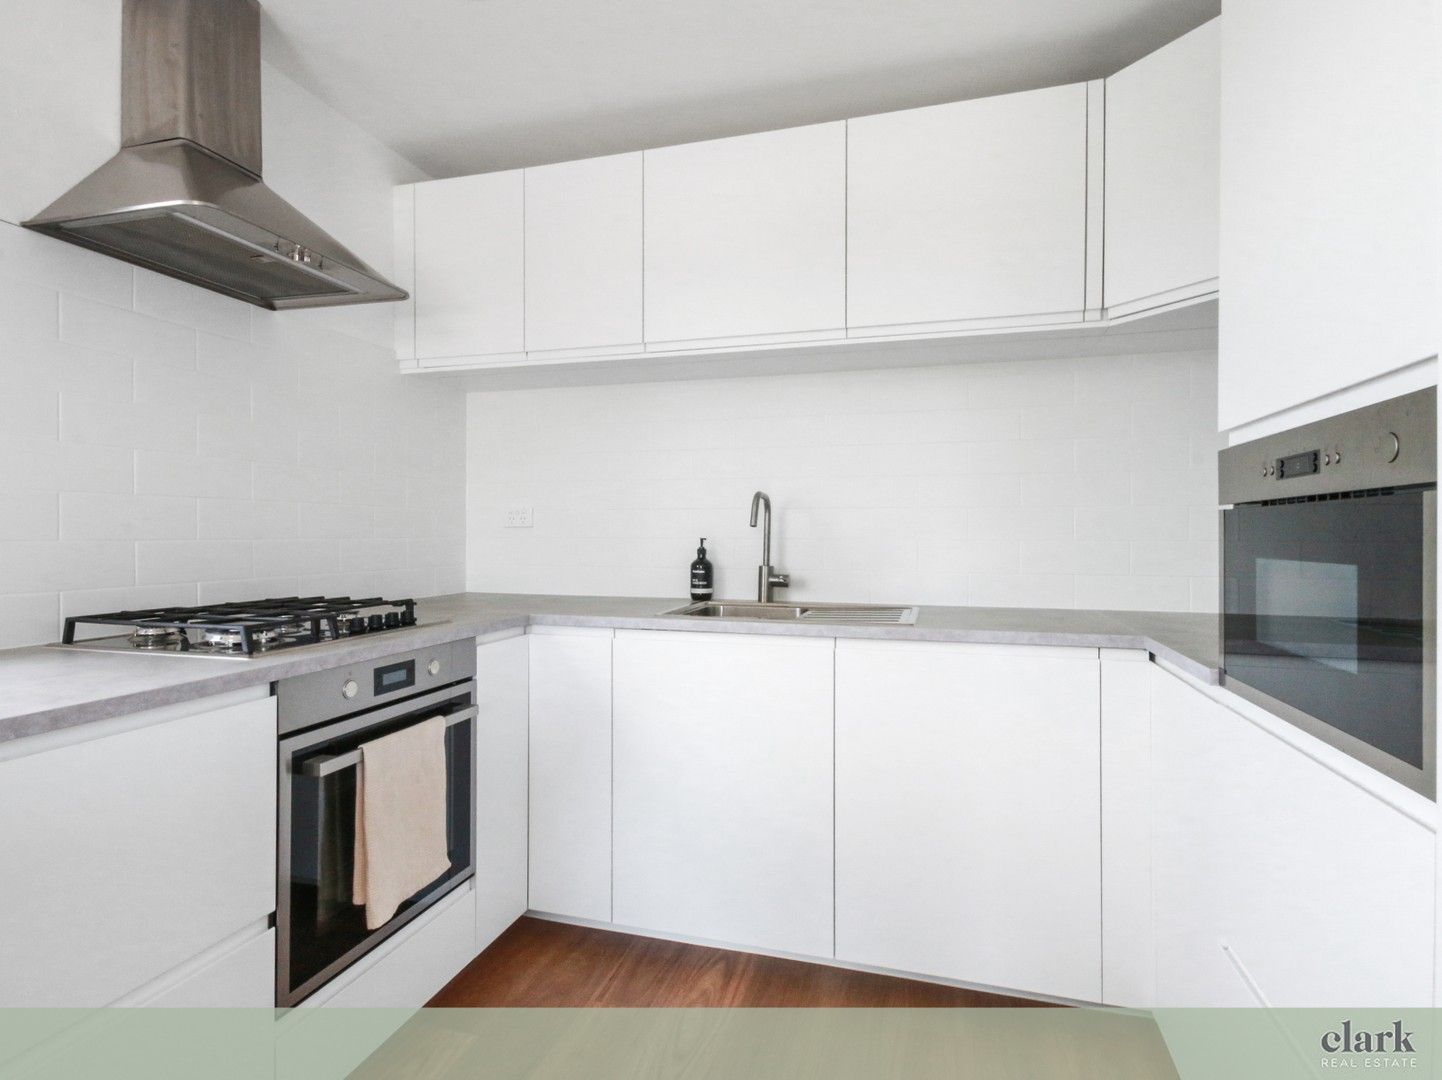 2 bedrooms Apartment / Unit / Flat in 6/55 Sixth Avenue KEDRON QLD, 4031